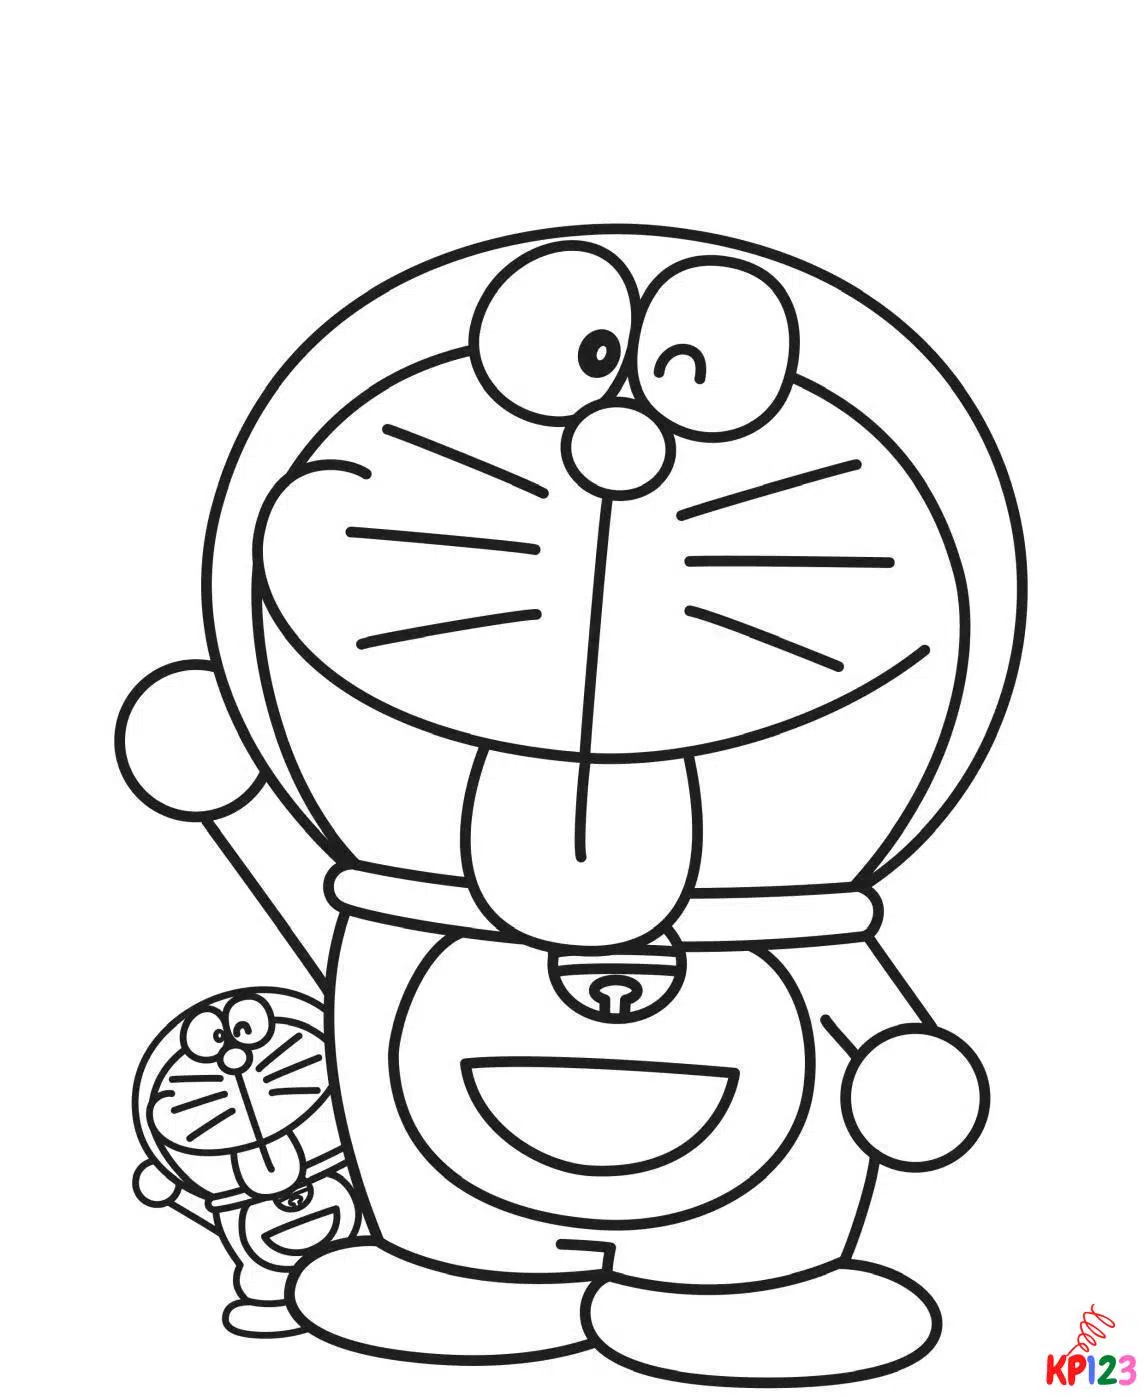 Doraemon 17